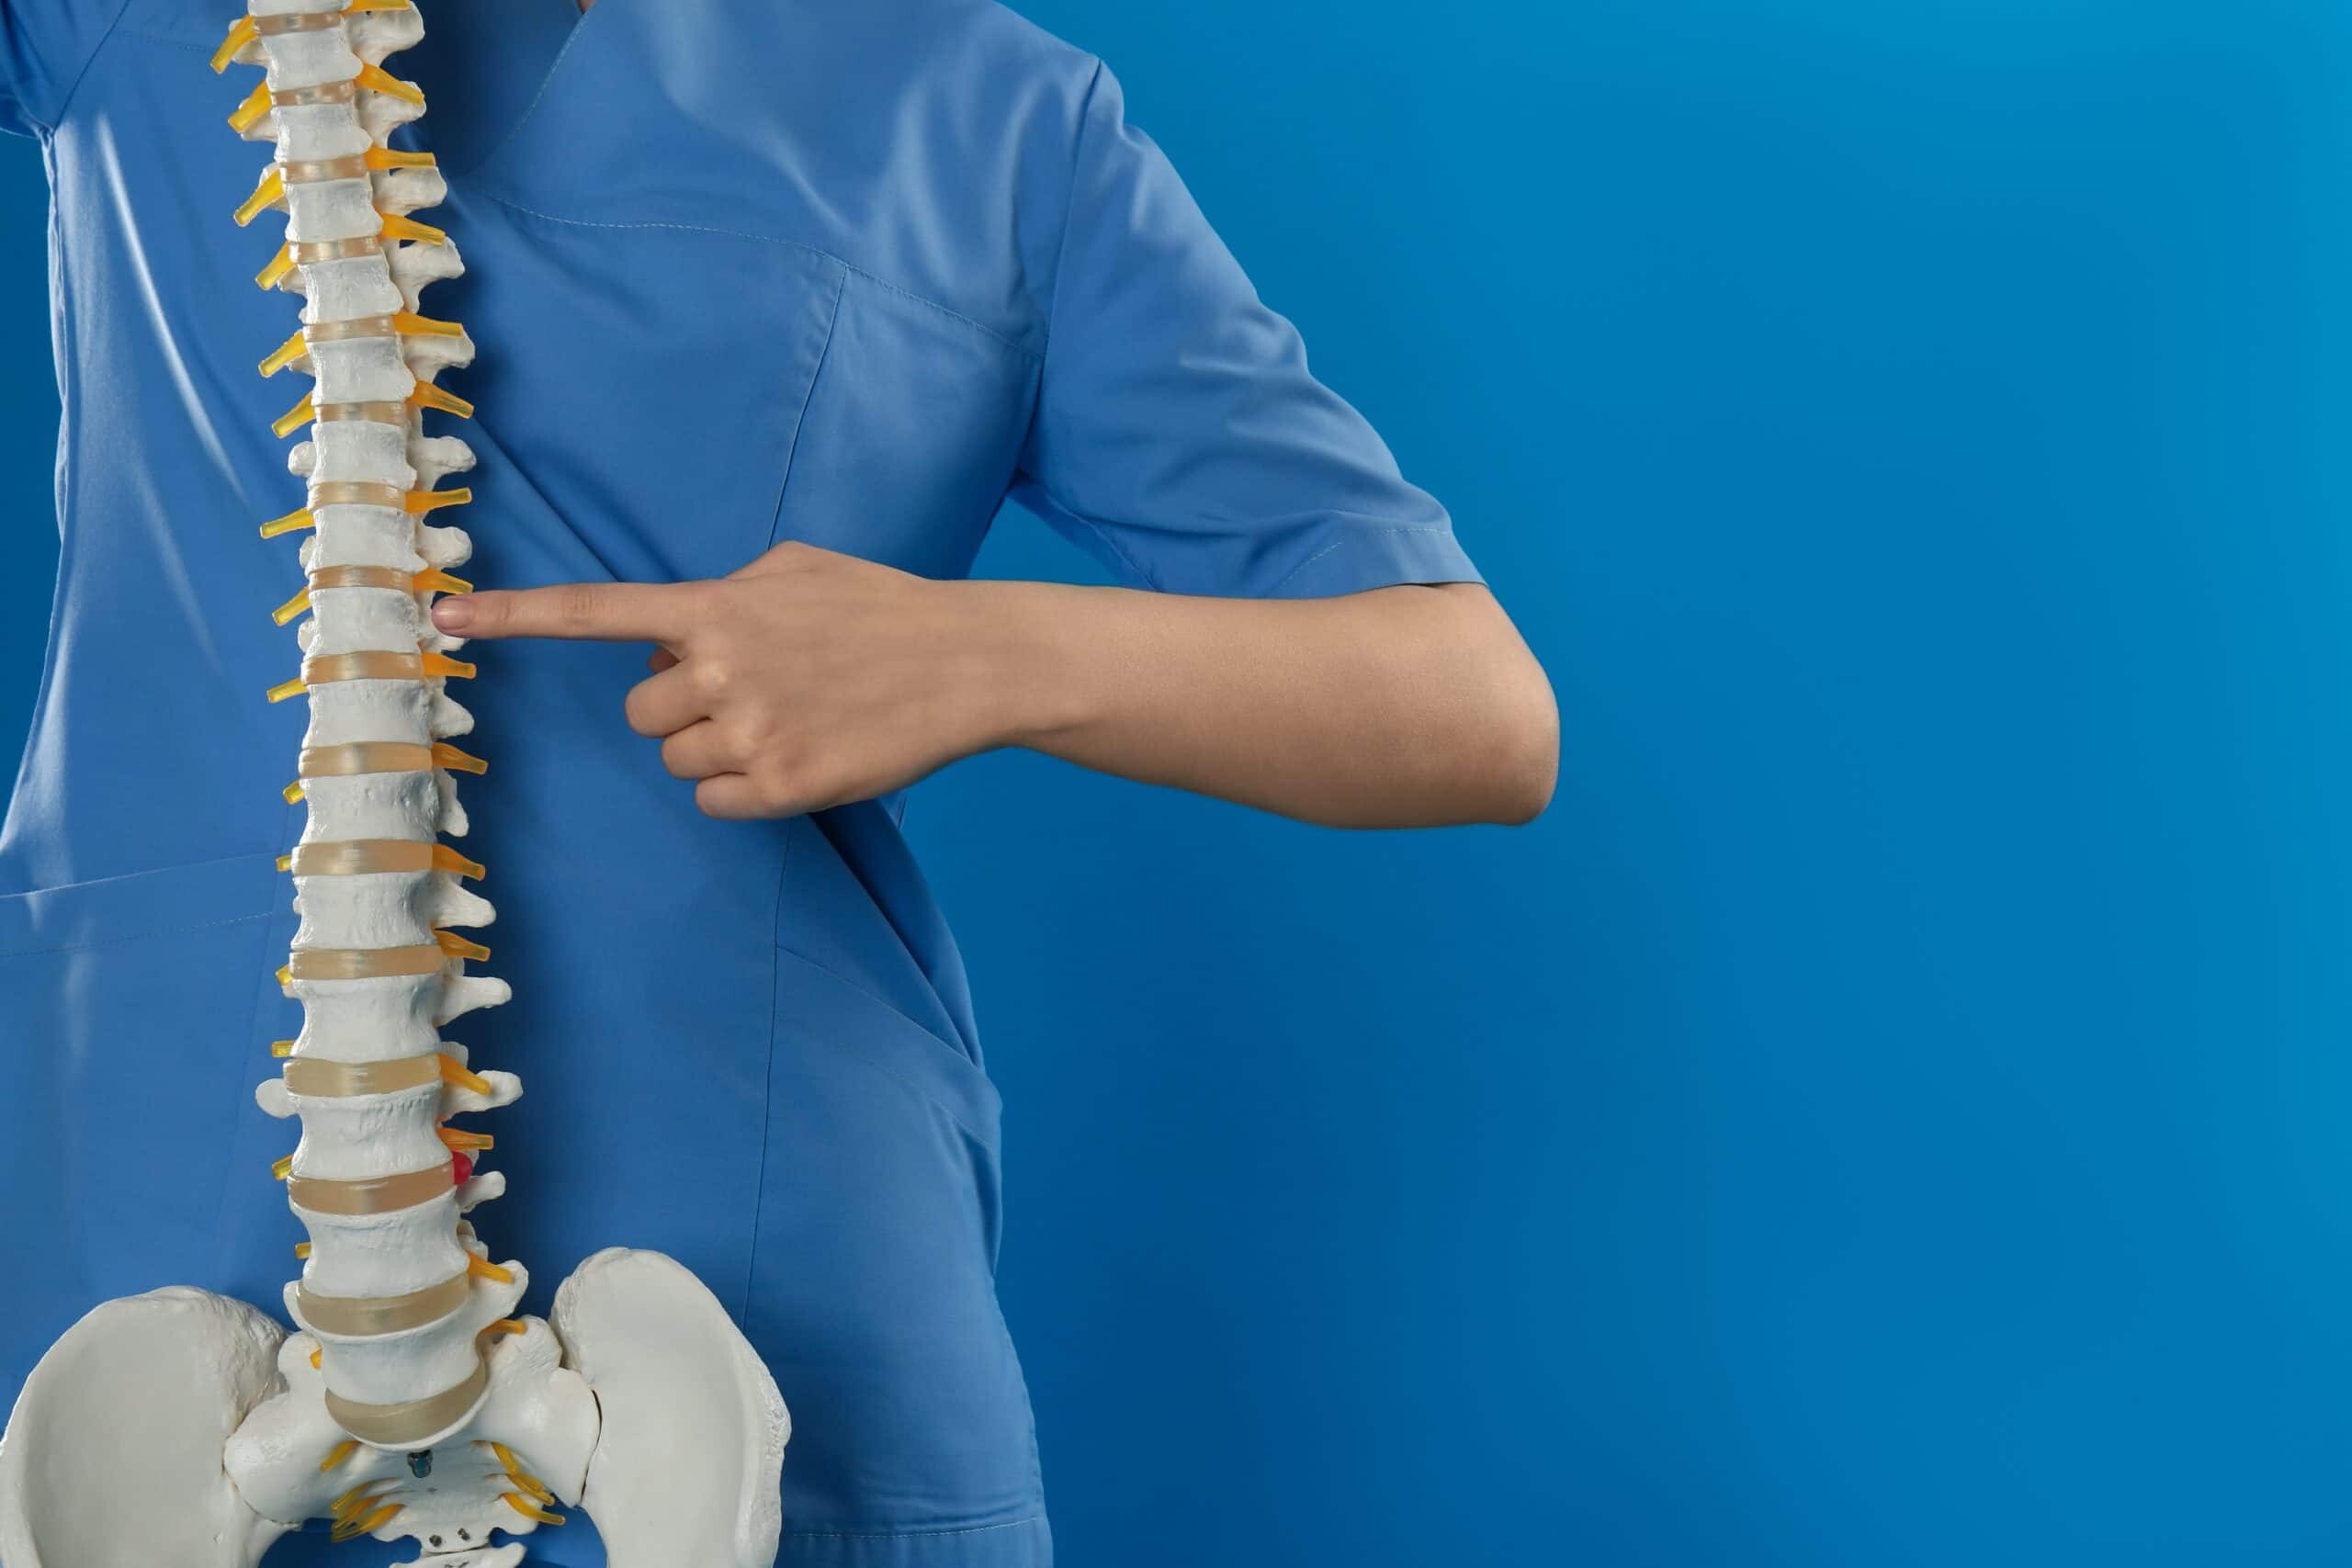 regenerative medicine specialist pointing spinal cord injury